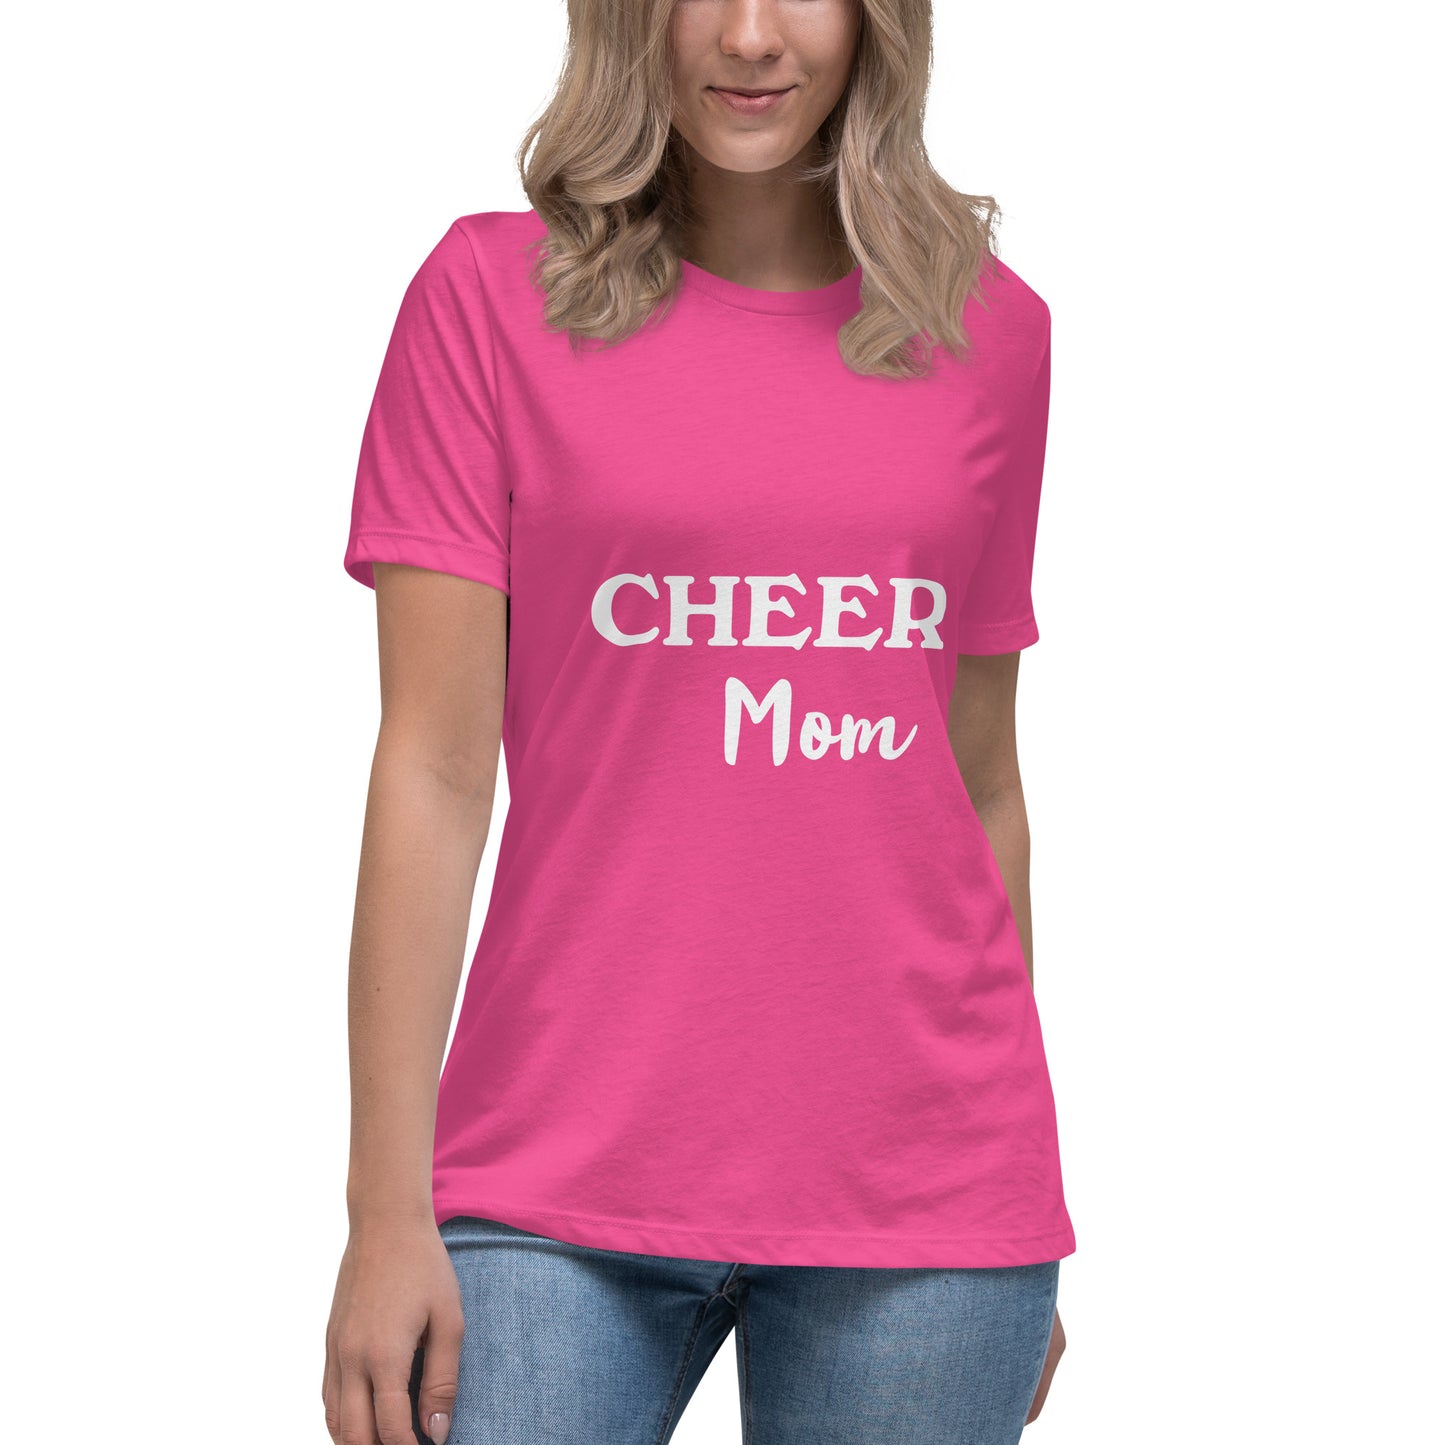 Cheer Mom Printed T-Shirt